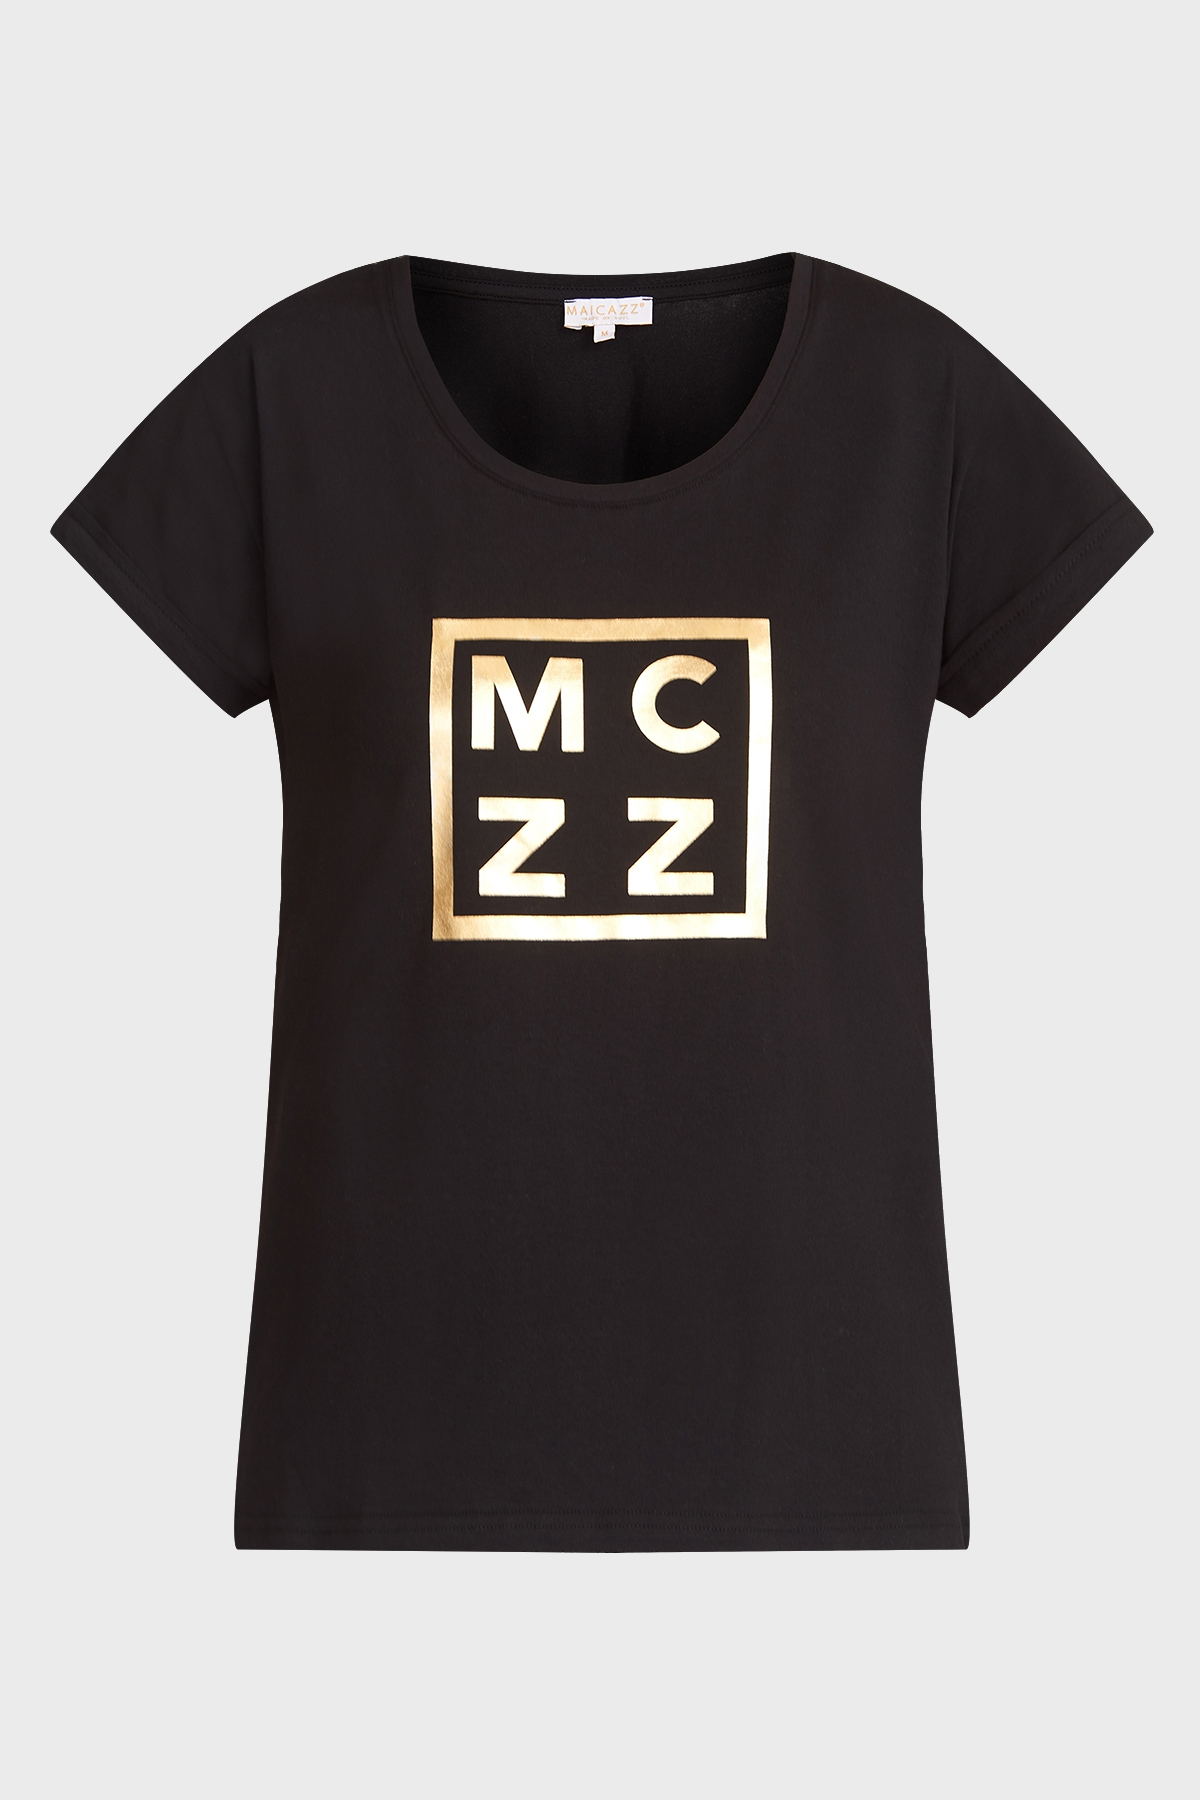 MAICAZZ T-Shirt Onora Black